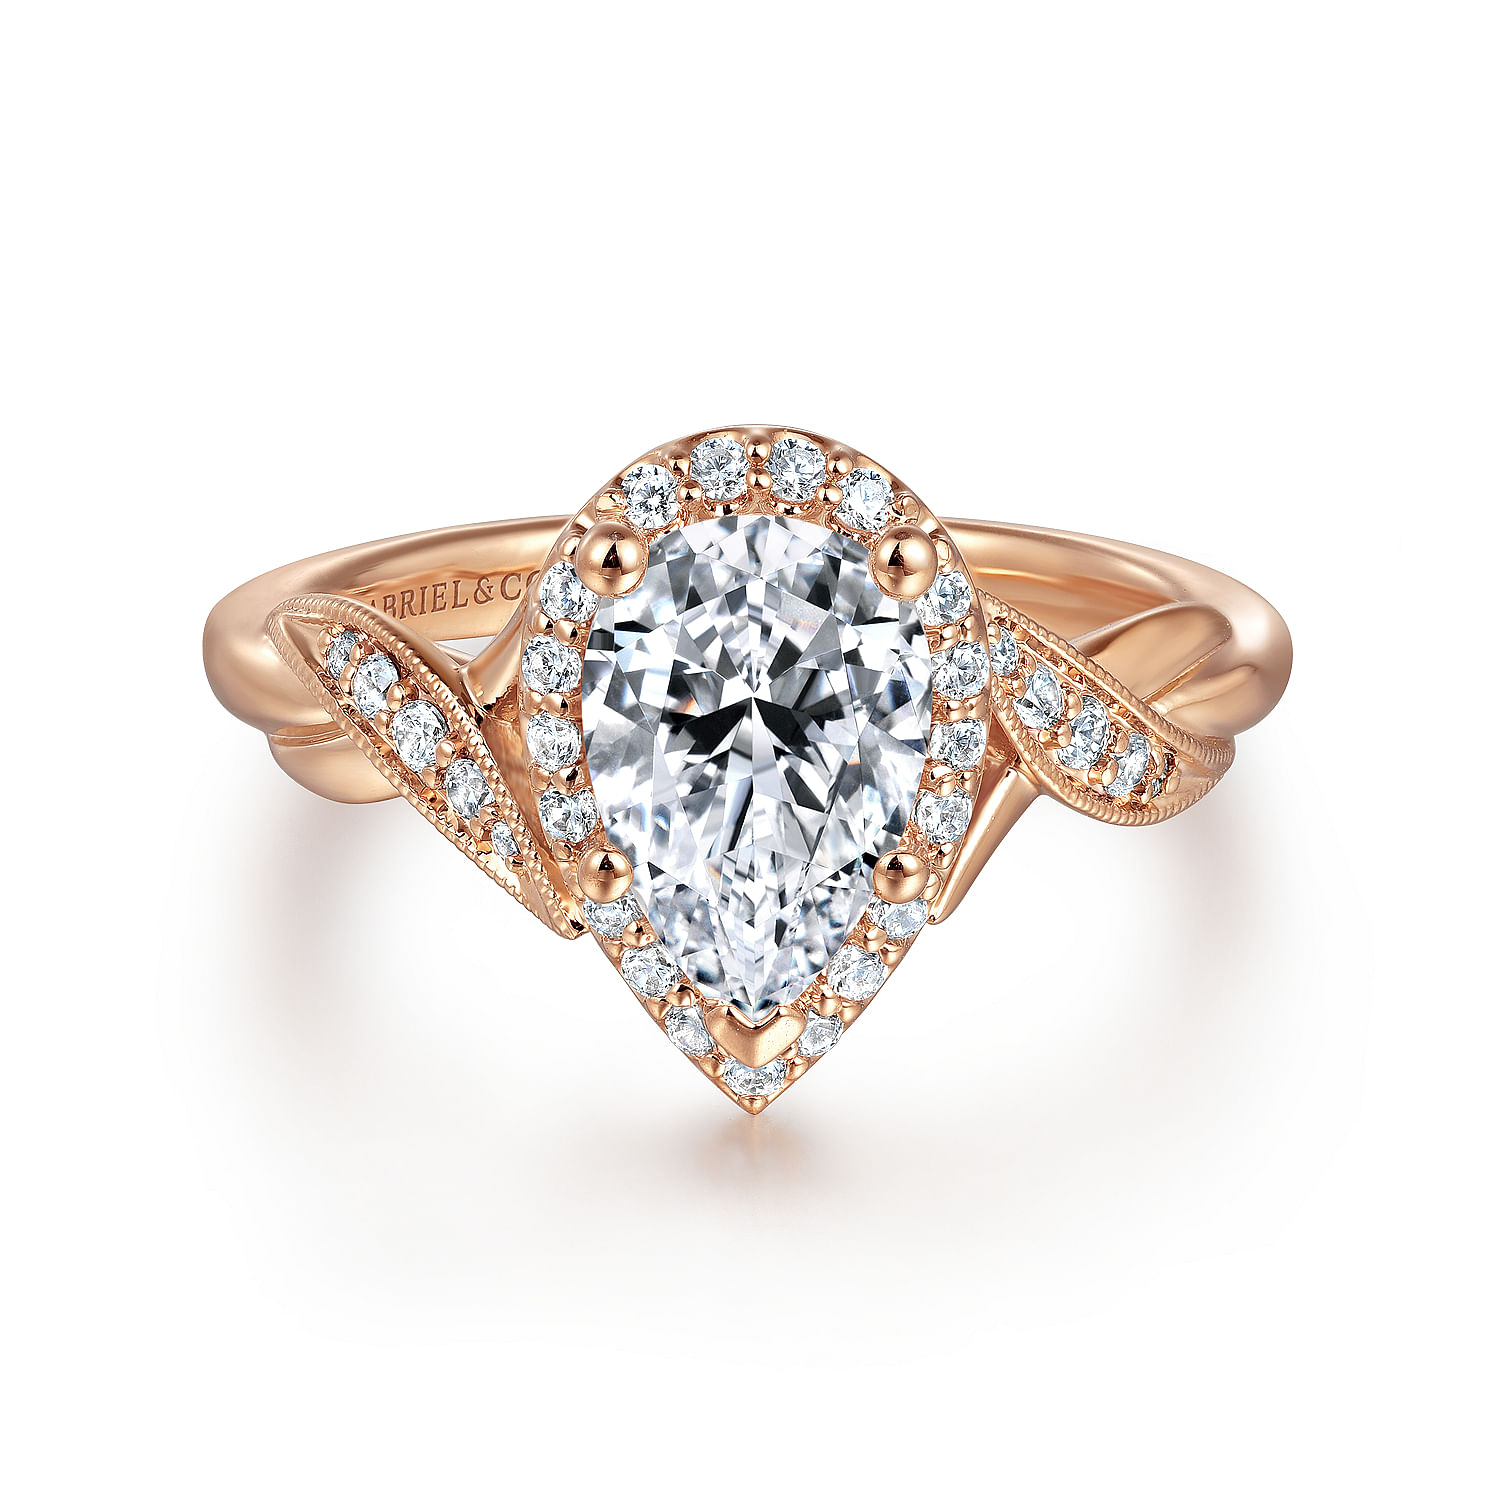 Shae - Vintage Inspired 14K Rose Gold Pear Shape Halo Diamond Engagement Ring